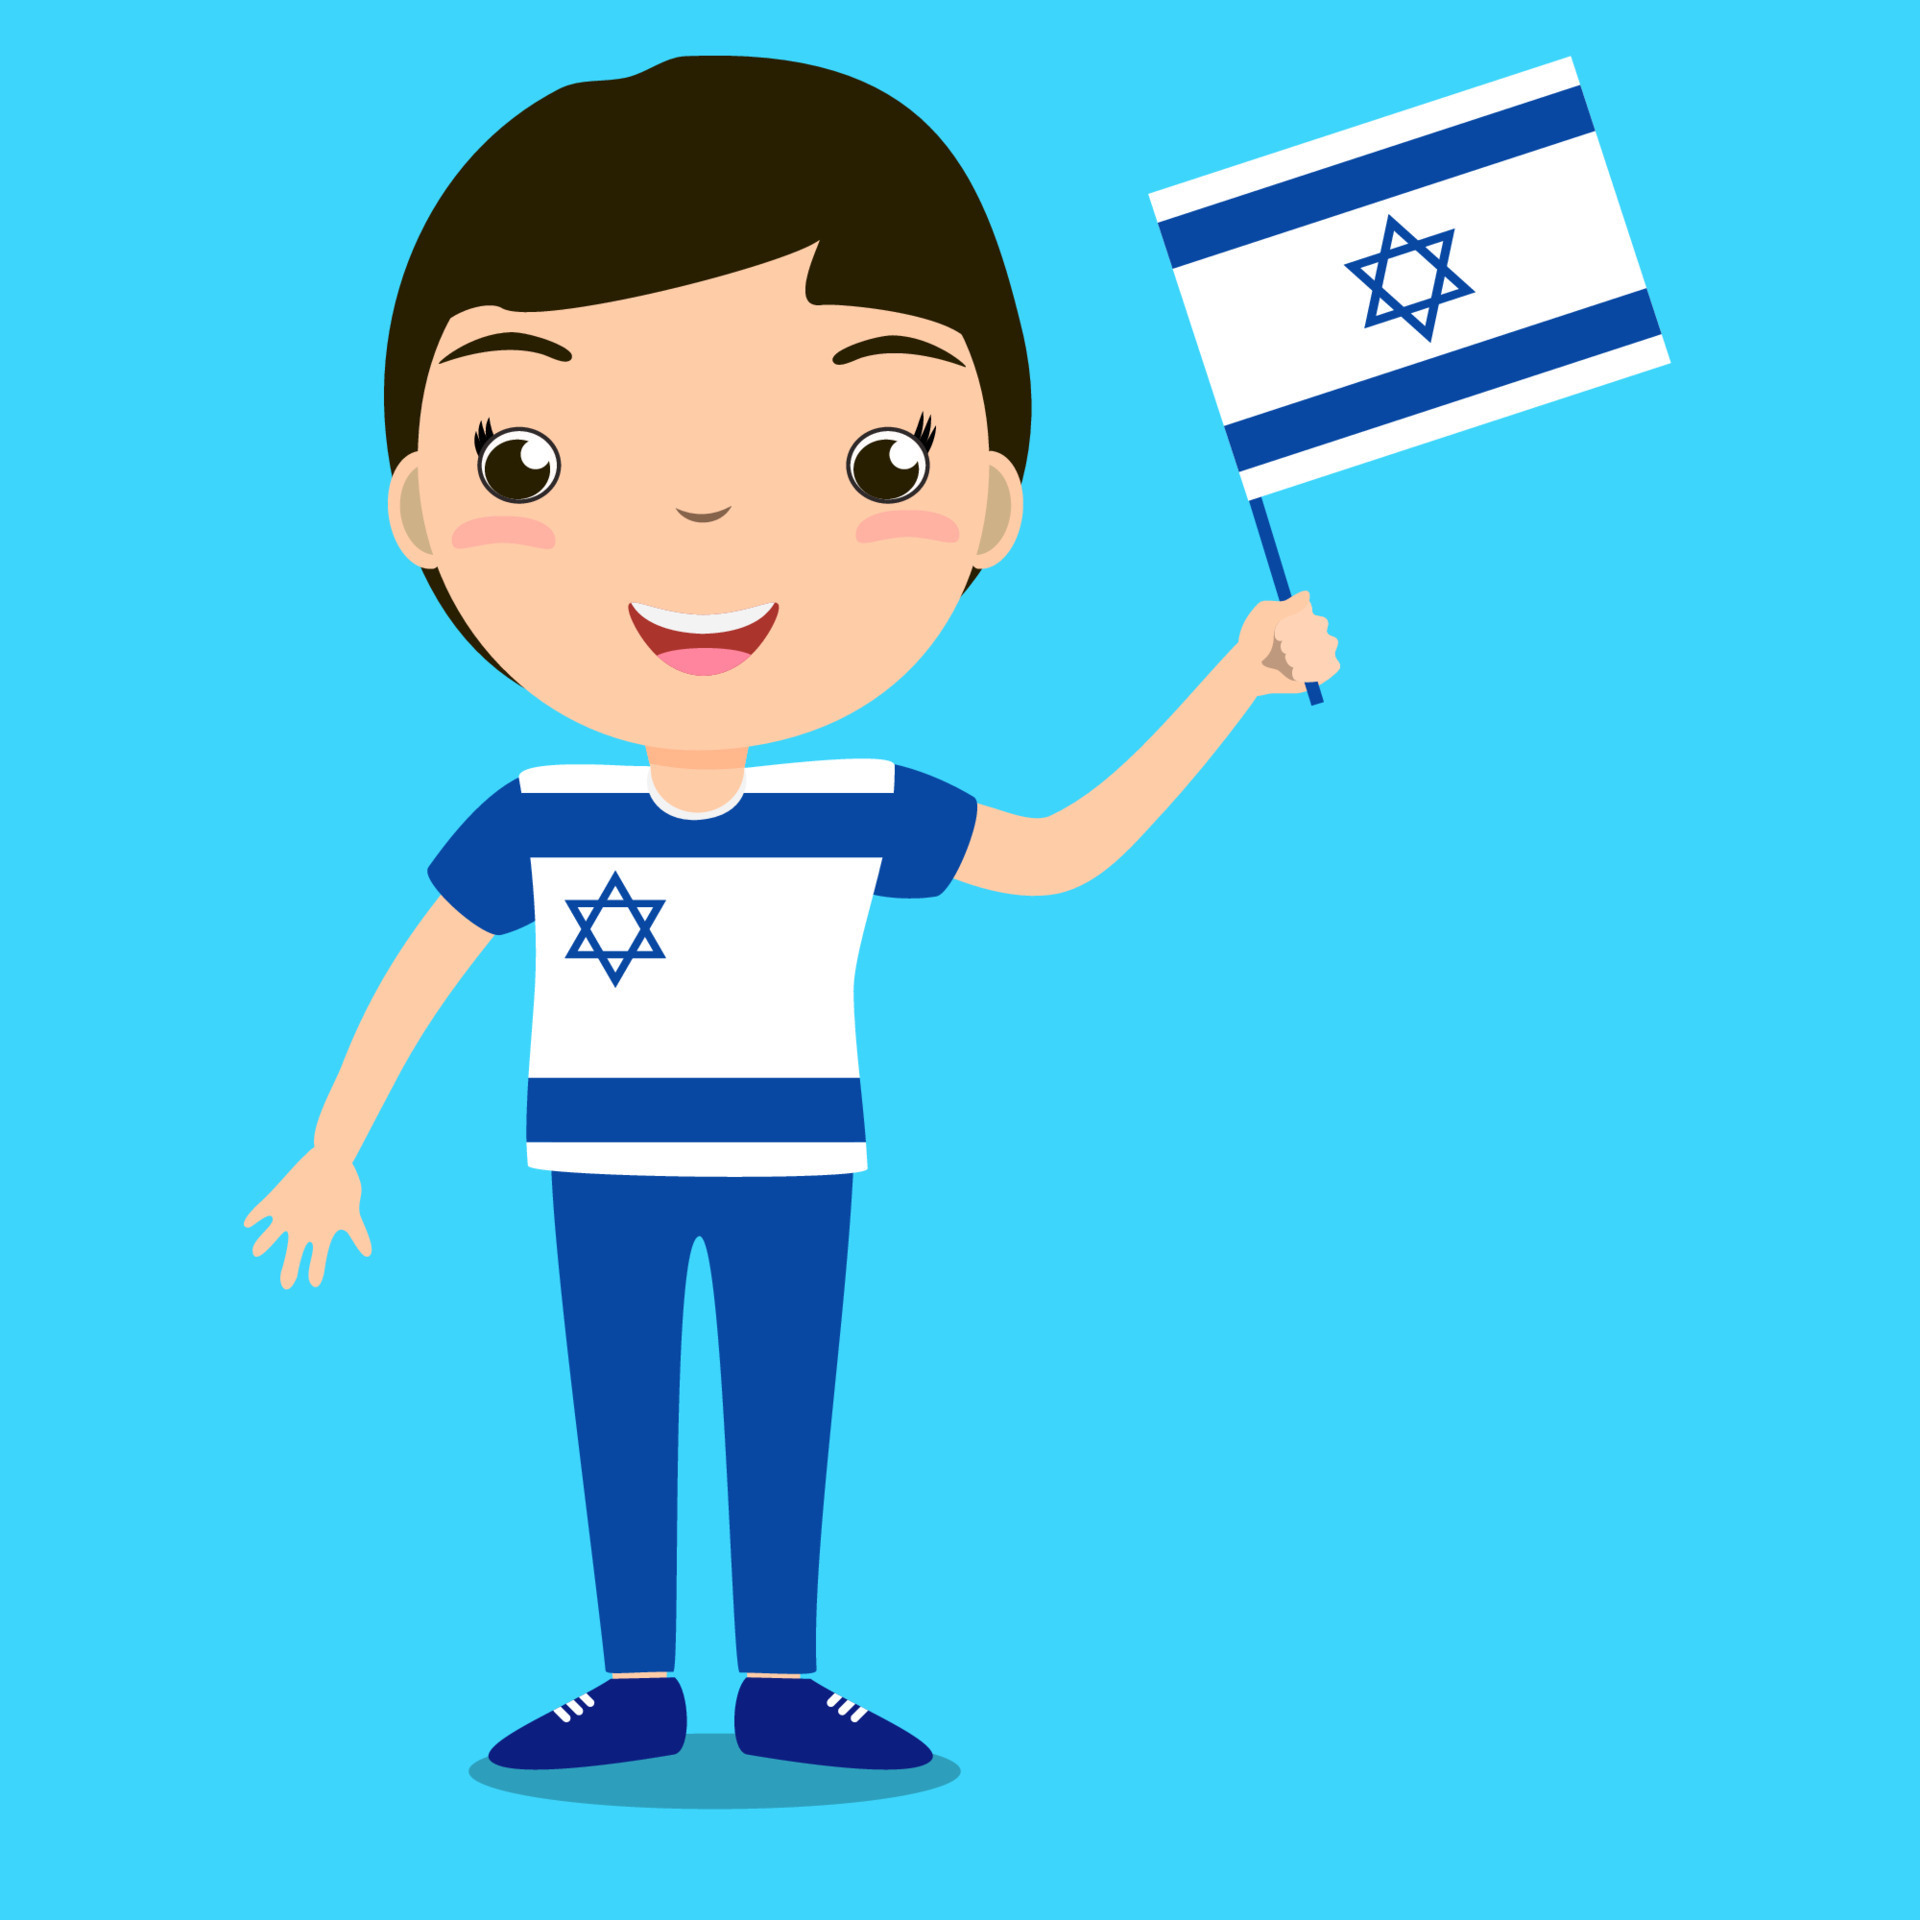 Smiling child, boy, holding a Israel flag isolated on blue background ...